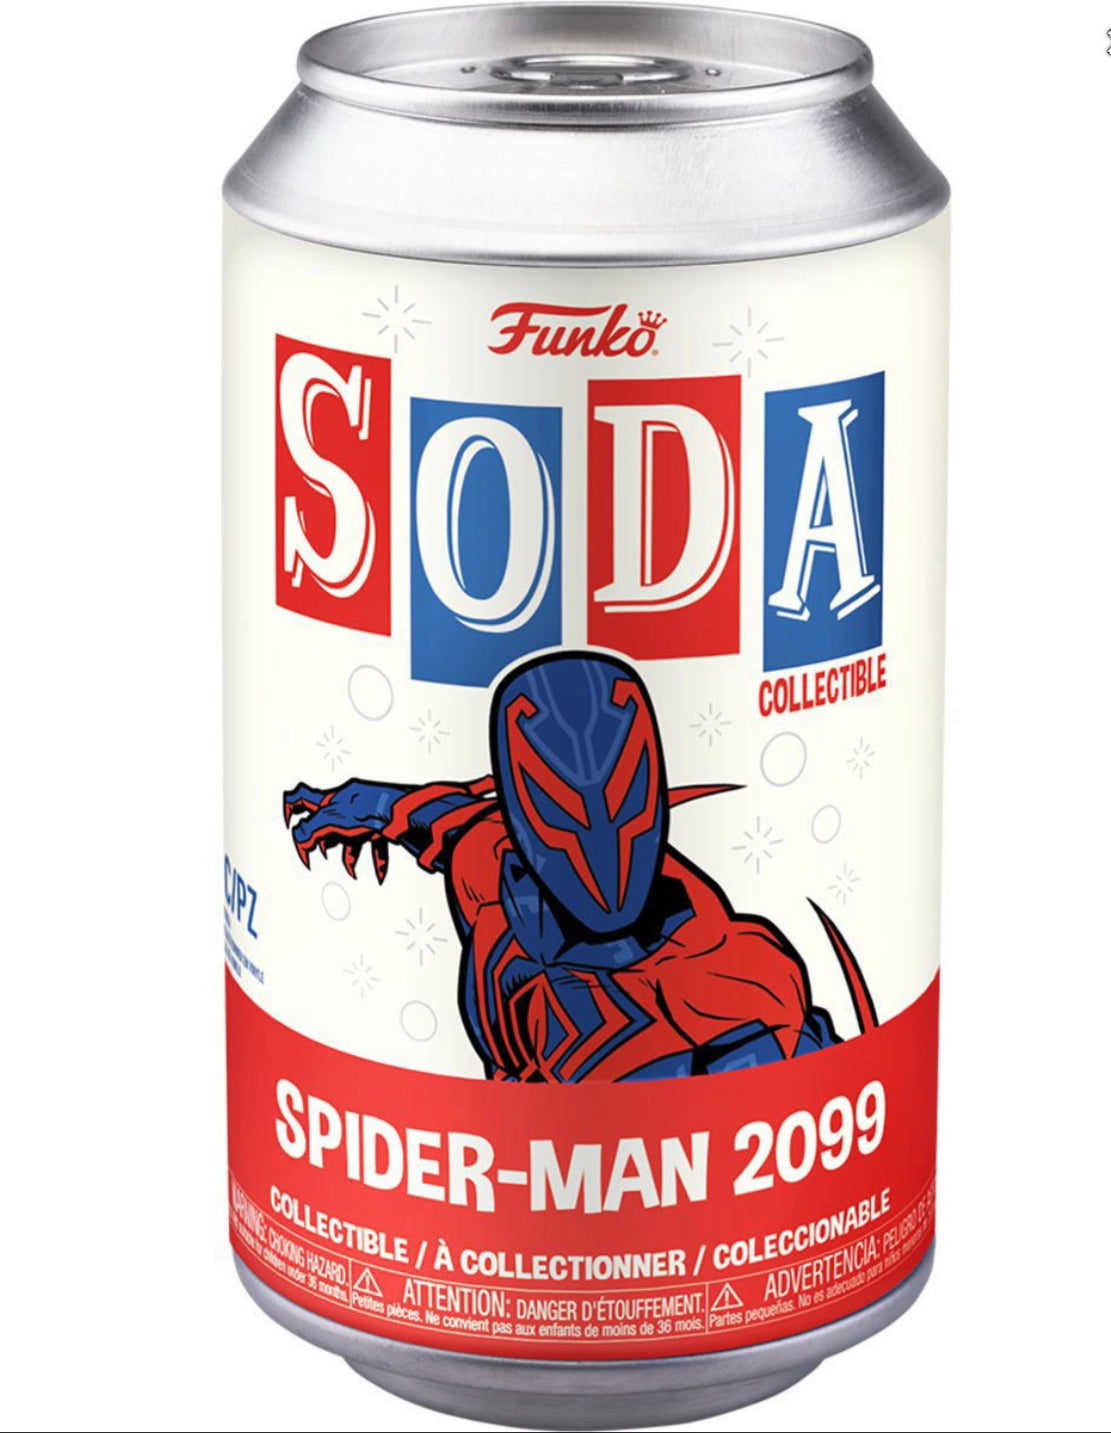 Marvel spiderverse spiderman 2099 Vinyl Soda sealed Mystery Funko figure limit 6